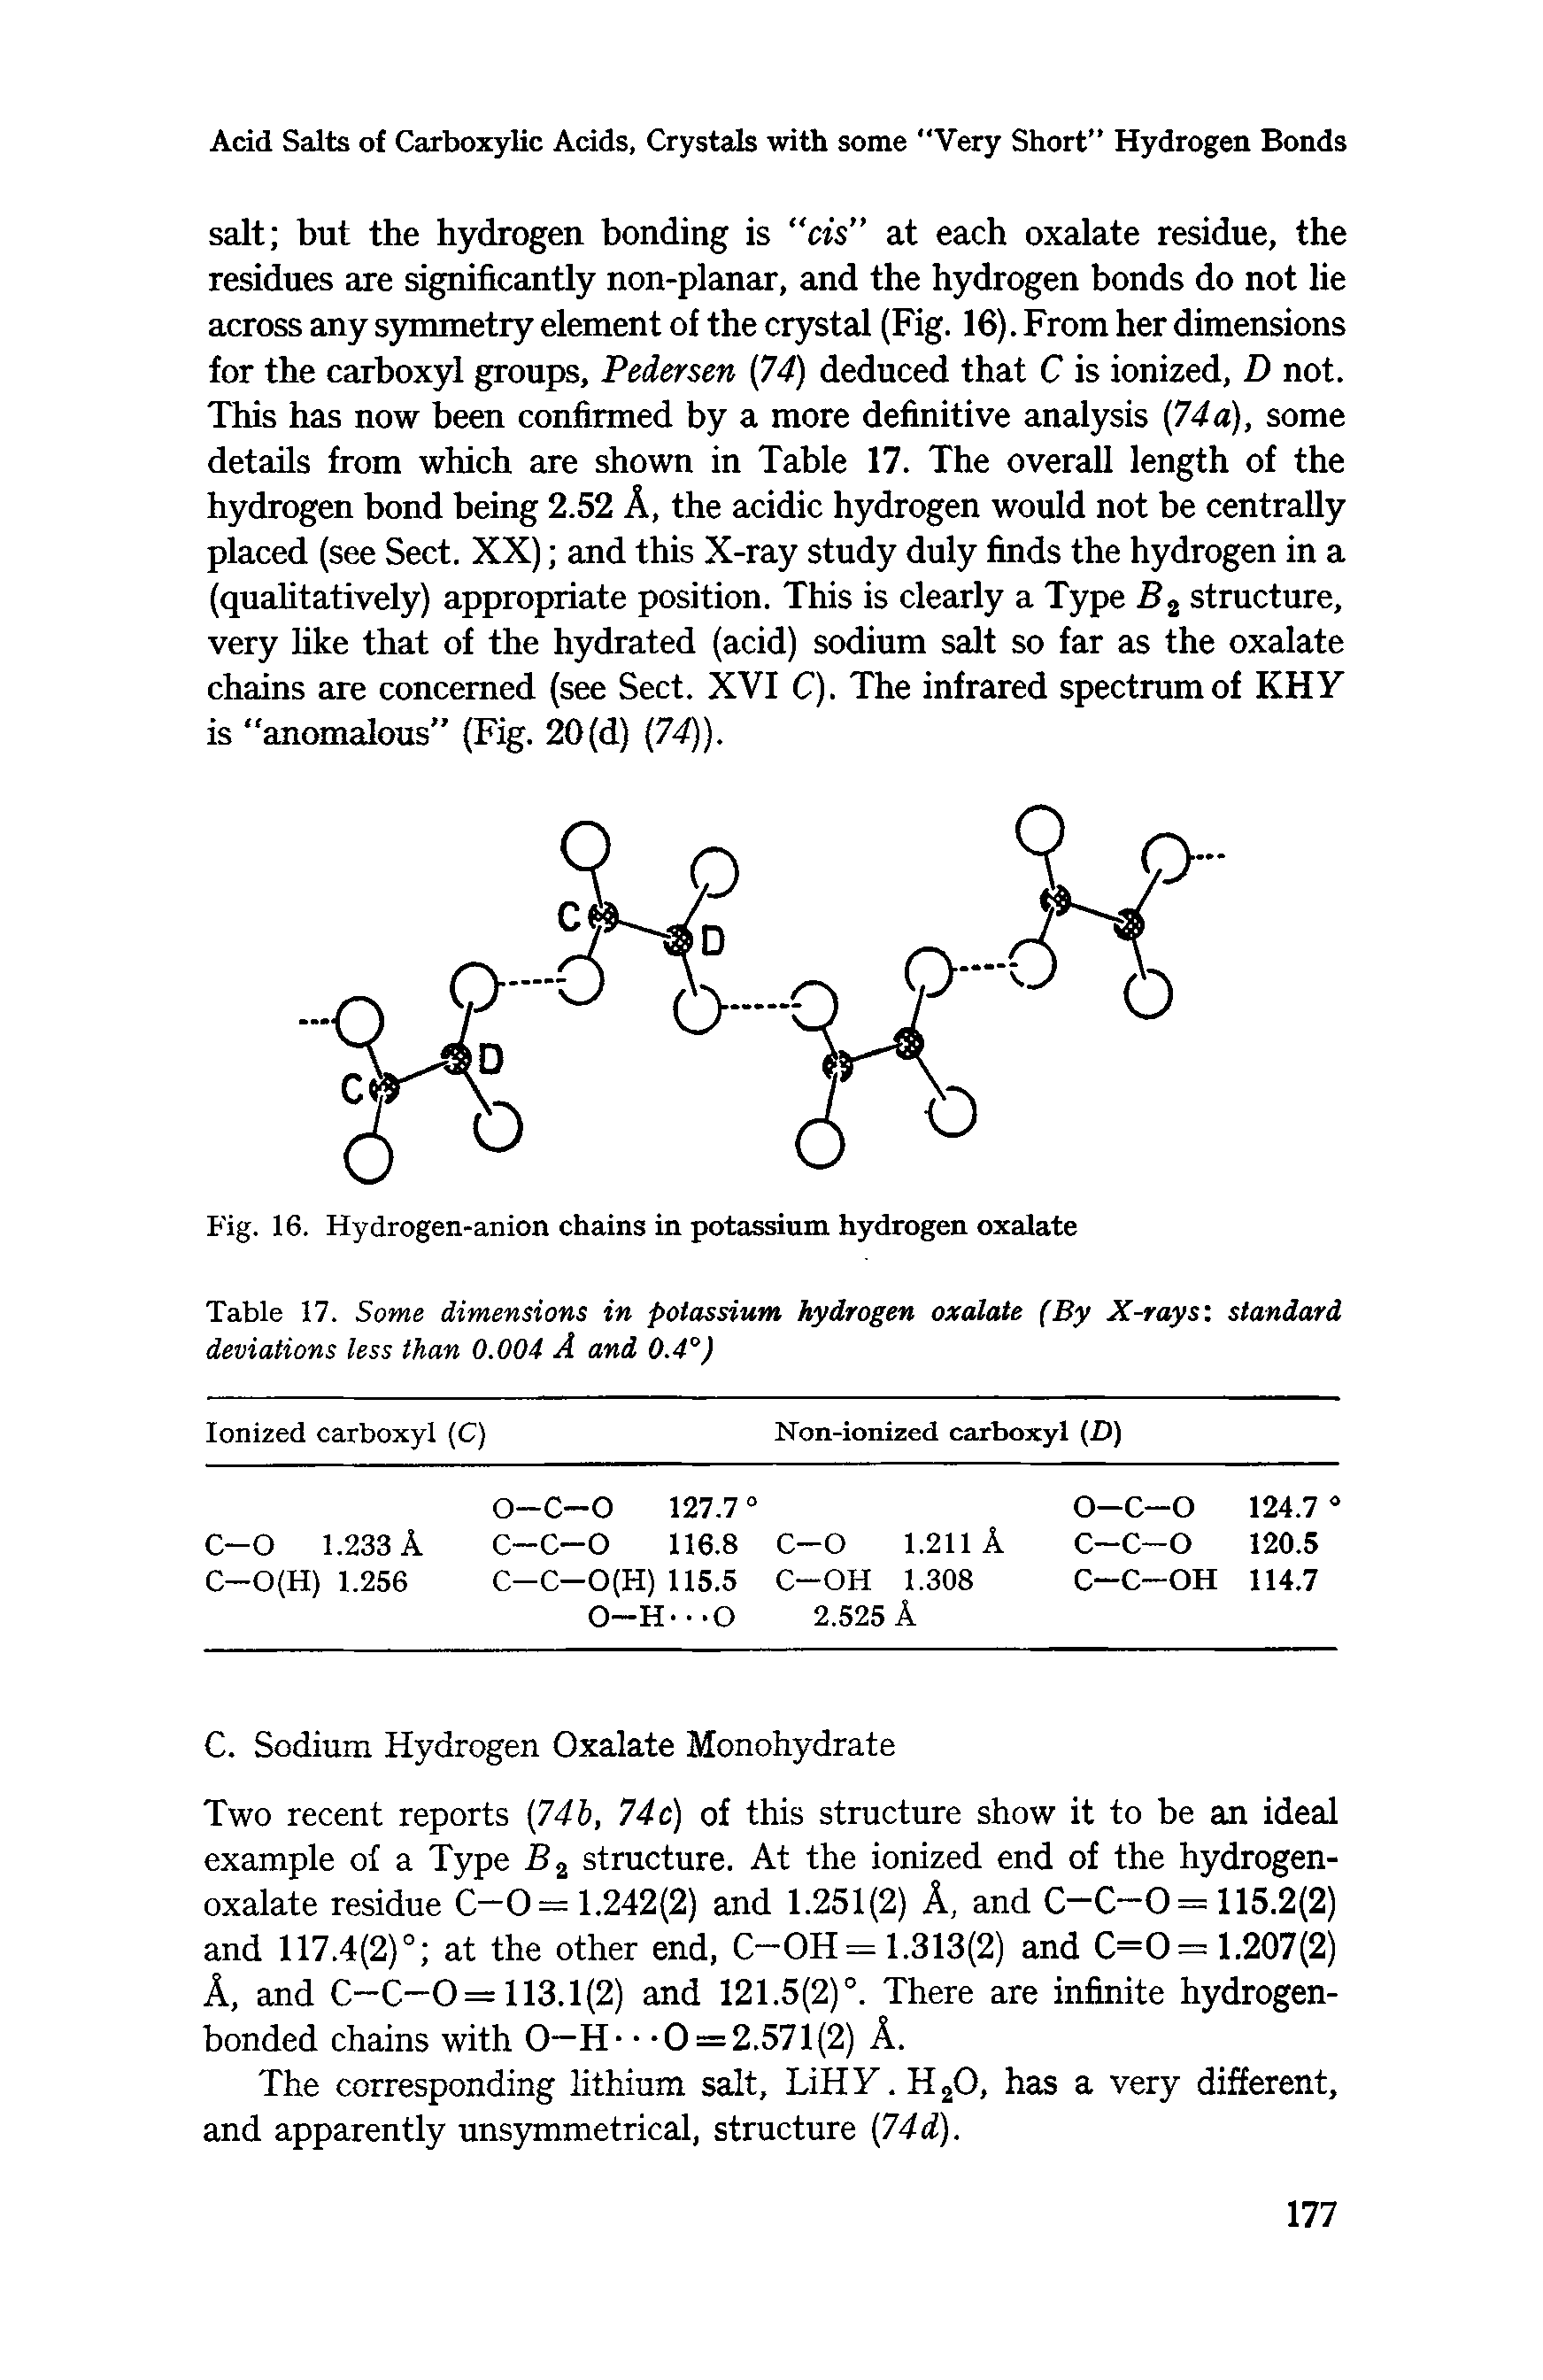 Fig. 16. Hydrogen-anion chains in potassium hydrogen oxalate...